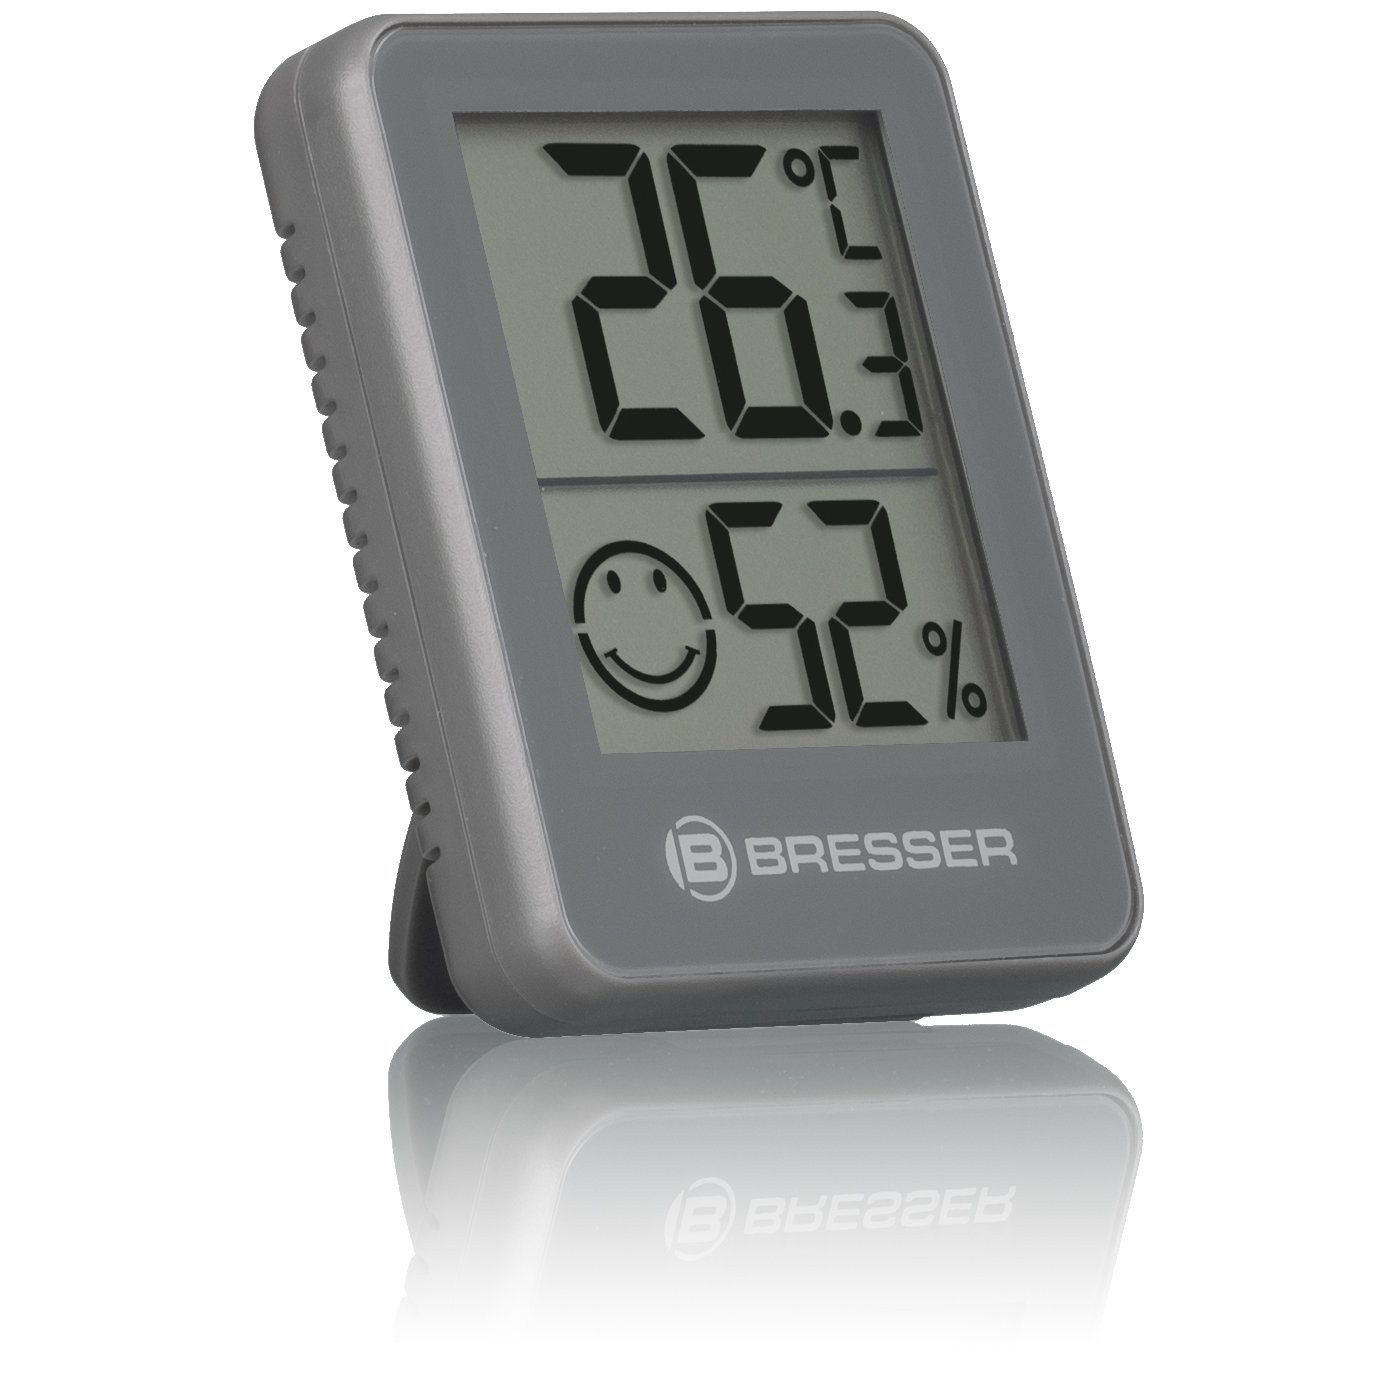 Thermo-/Hygrometer Hygro 6er-Set BRESSER Hygrometer Temeo Indikator